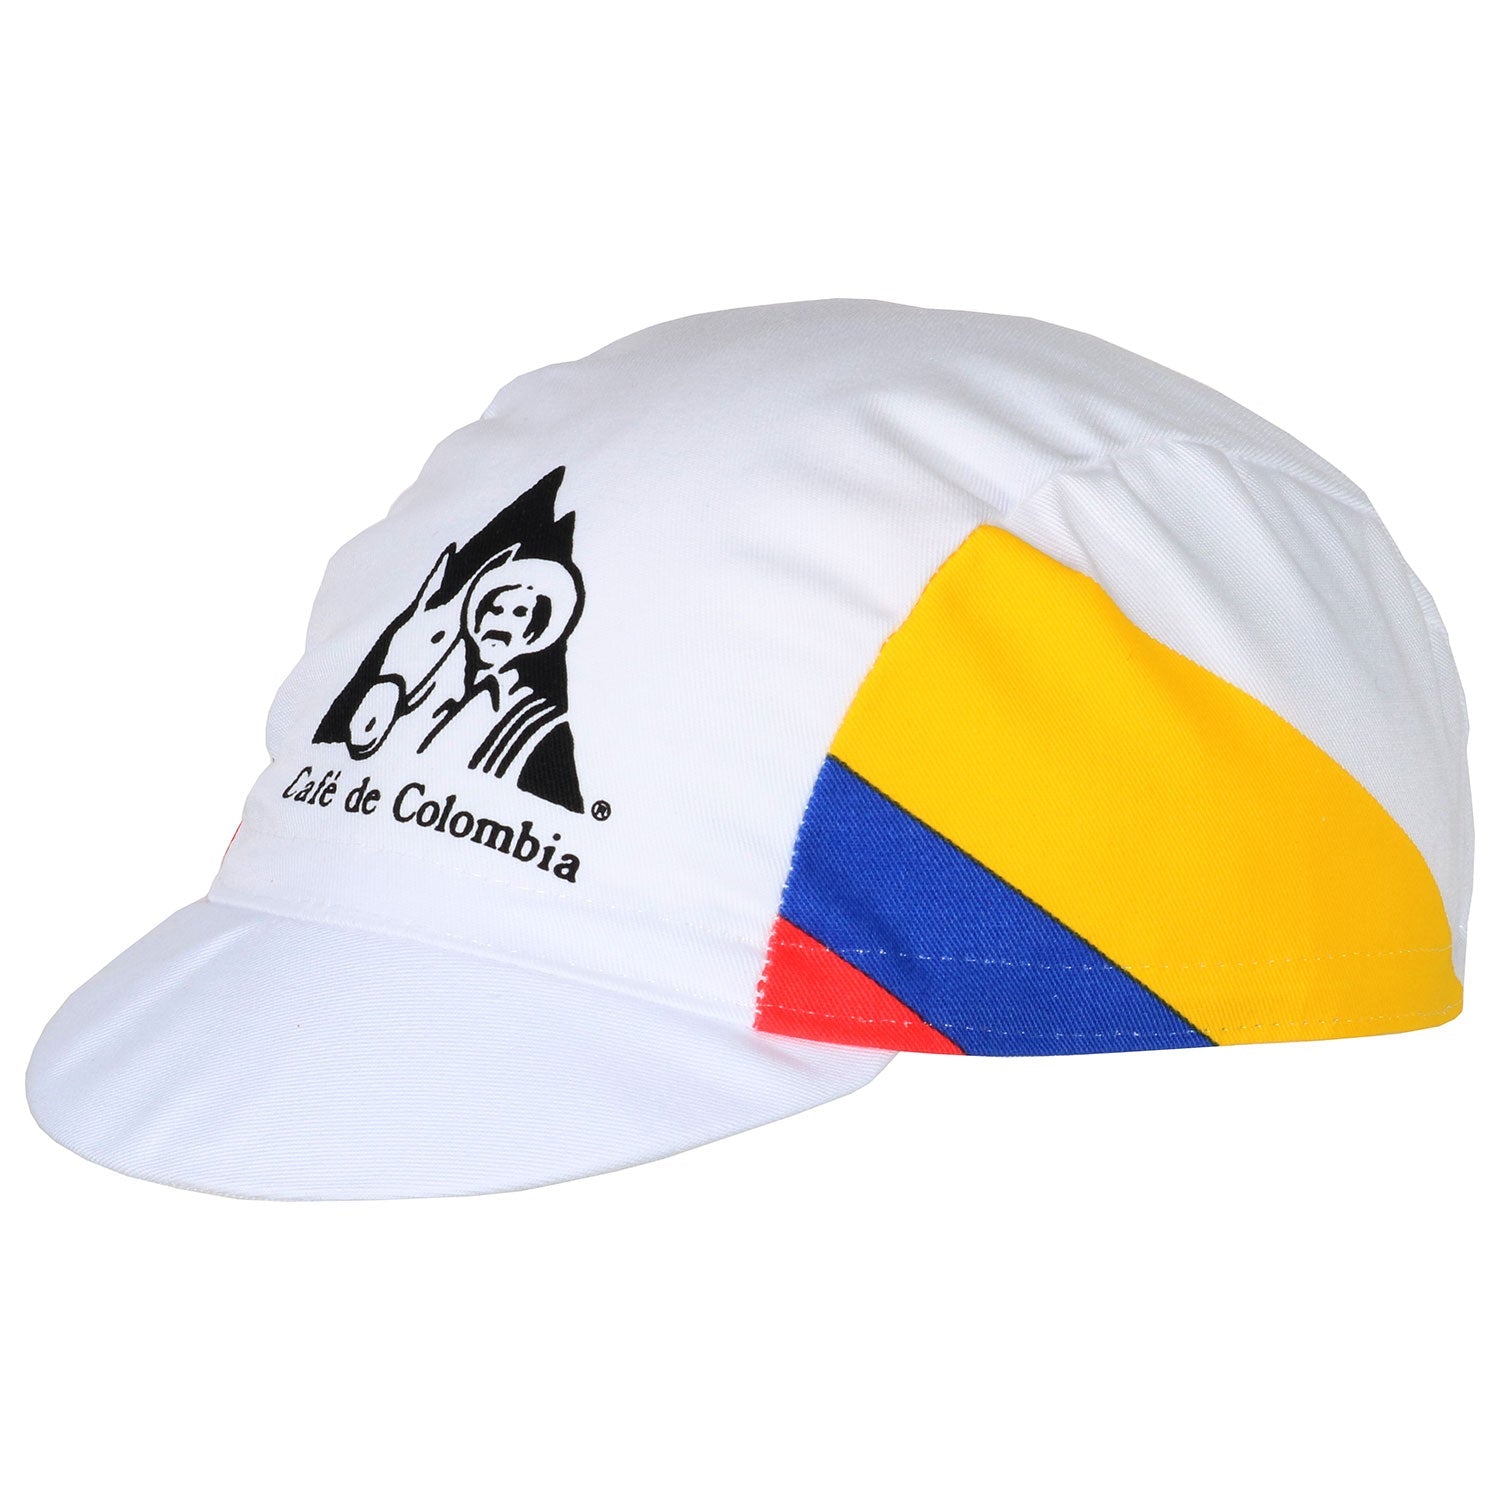 Colombia Retro Cotton Cycling Cap